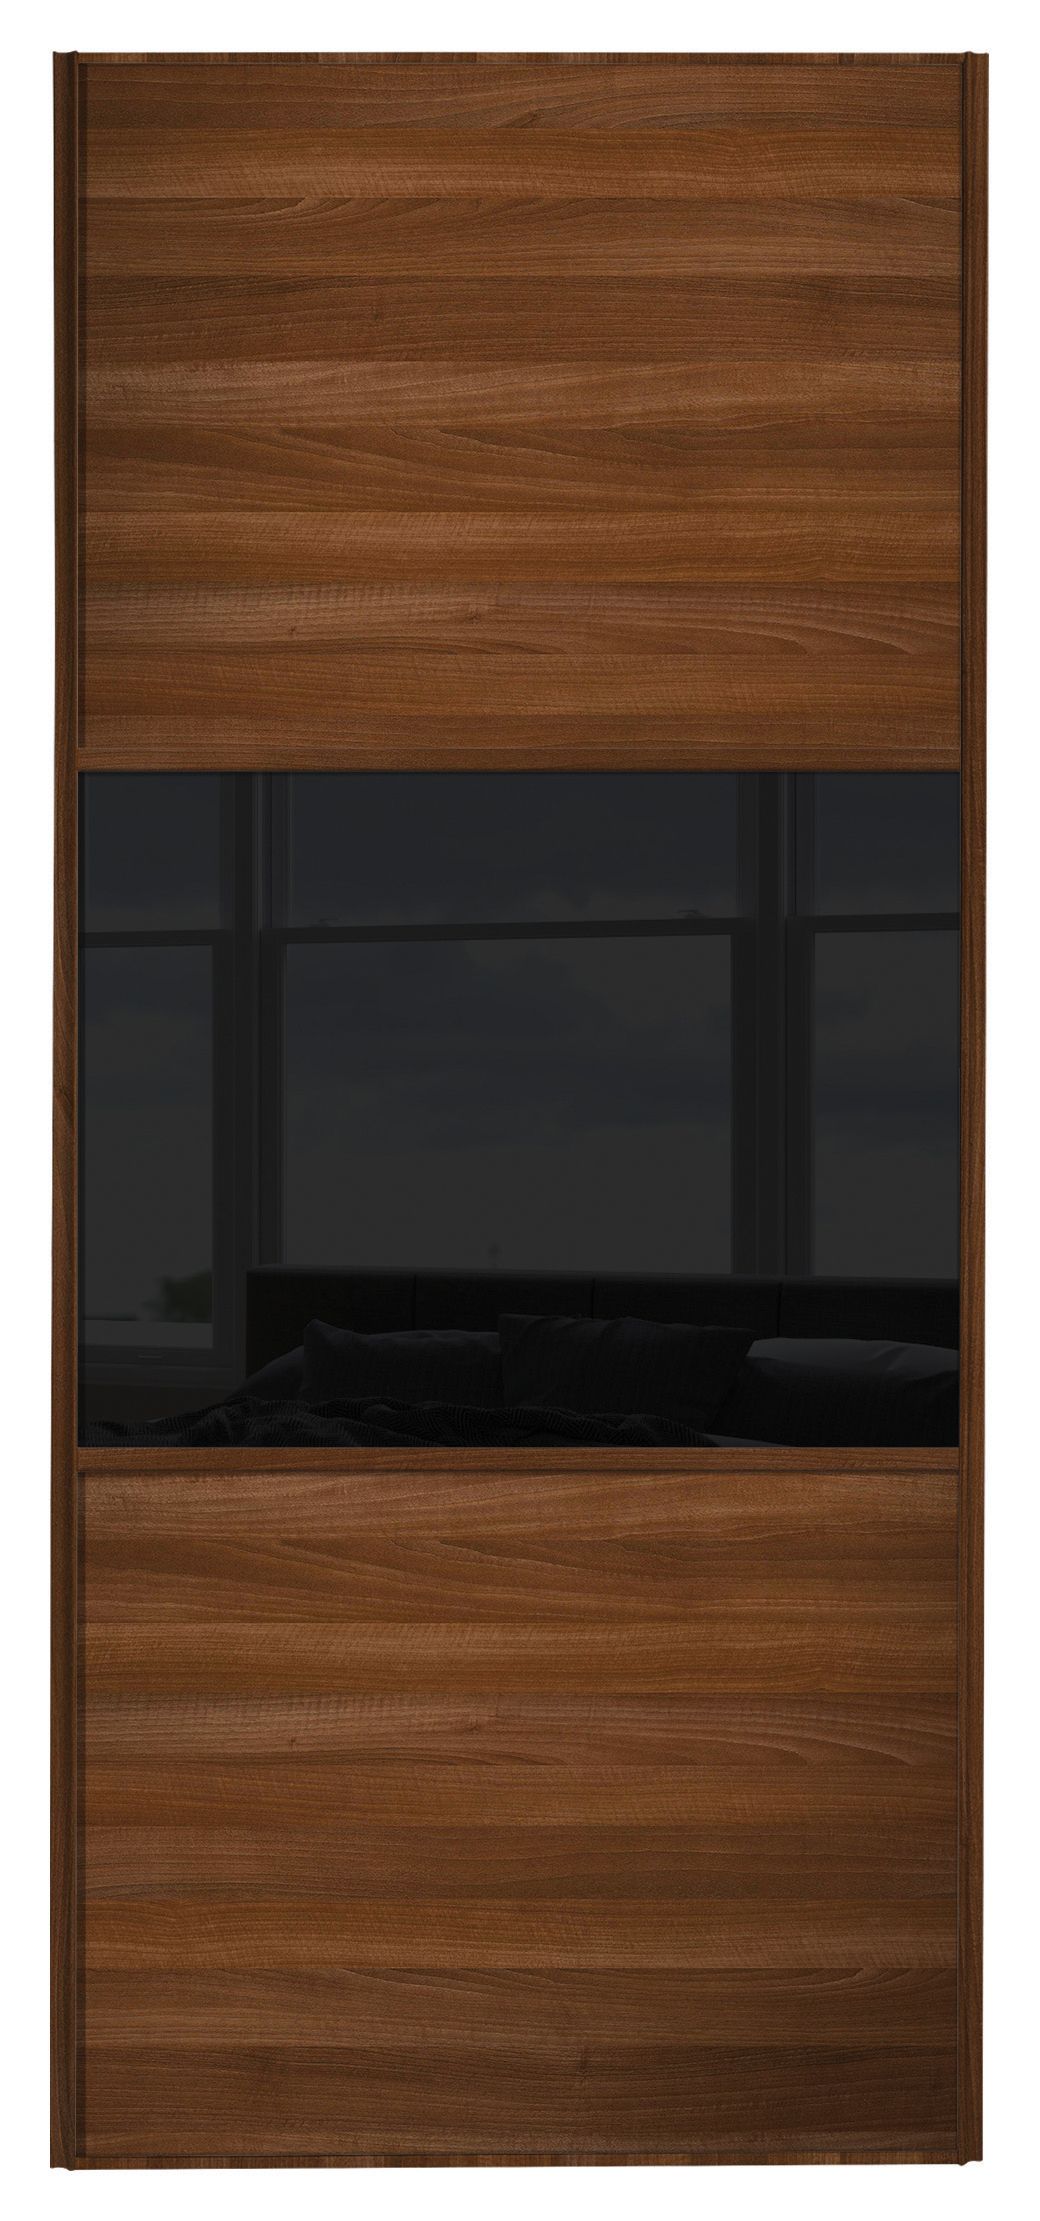 Spacepro Linear Wood Effect Frame Wideline/Fineline Sliding Wardrobe Door - Made to Measure 550-900mm